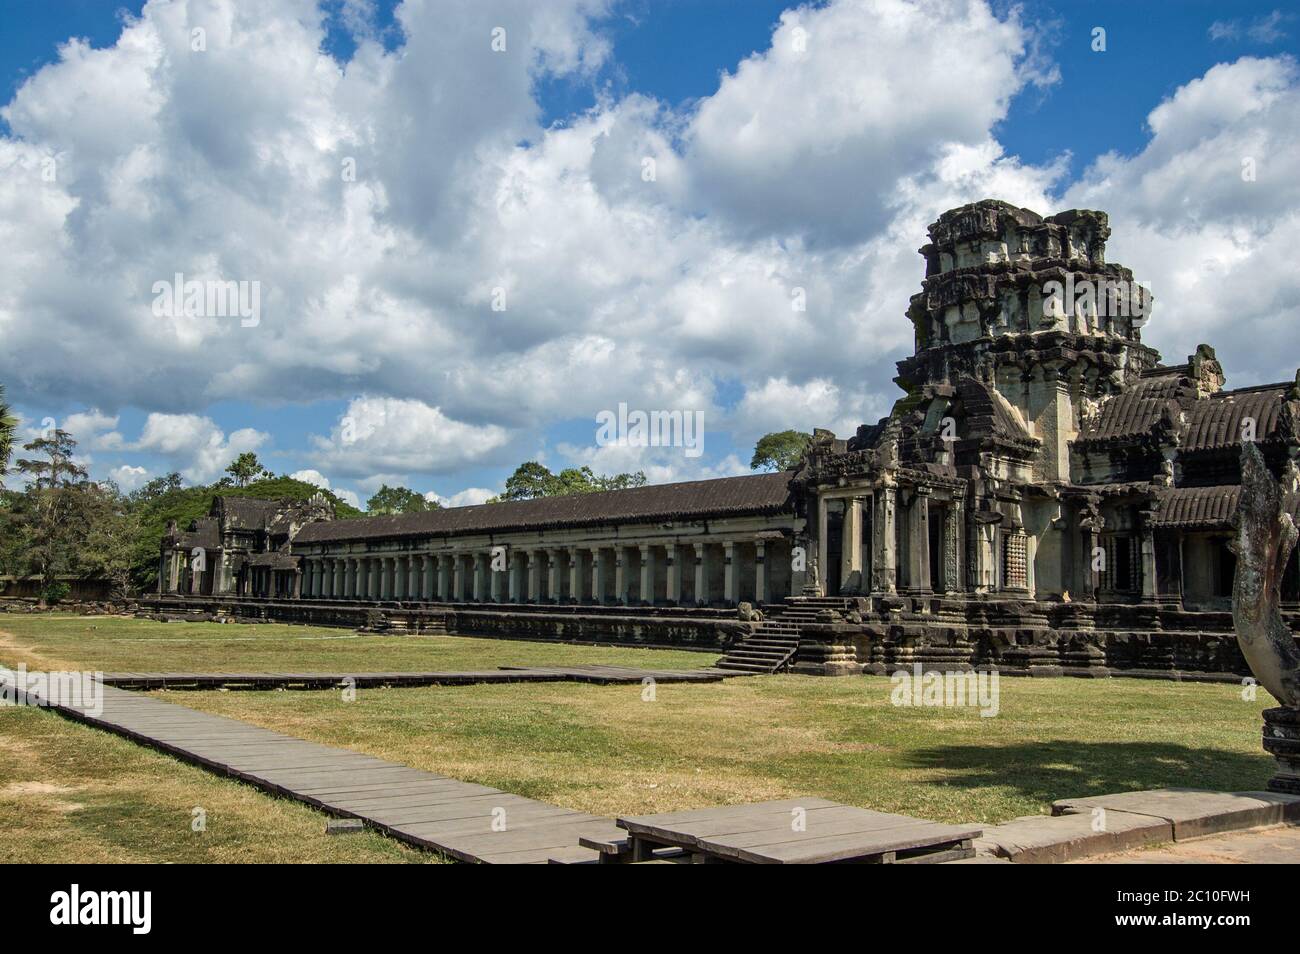 La Gopura occidentale, o biblioteca, dell'antico tempio Khmer di Angkor Wat, Siem Reap, Cambogia. Foto Stock